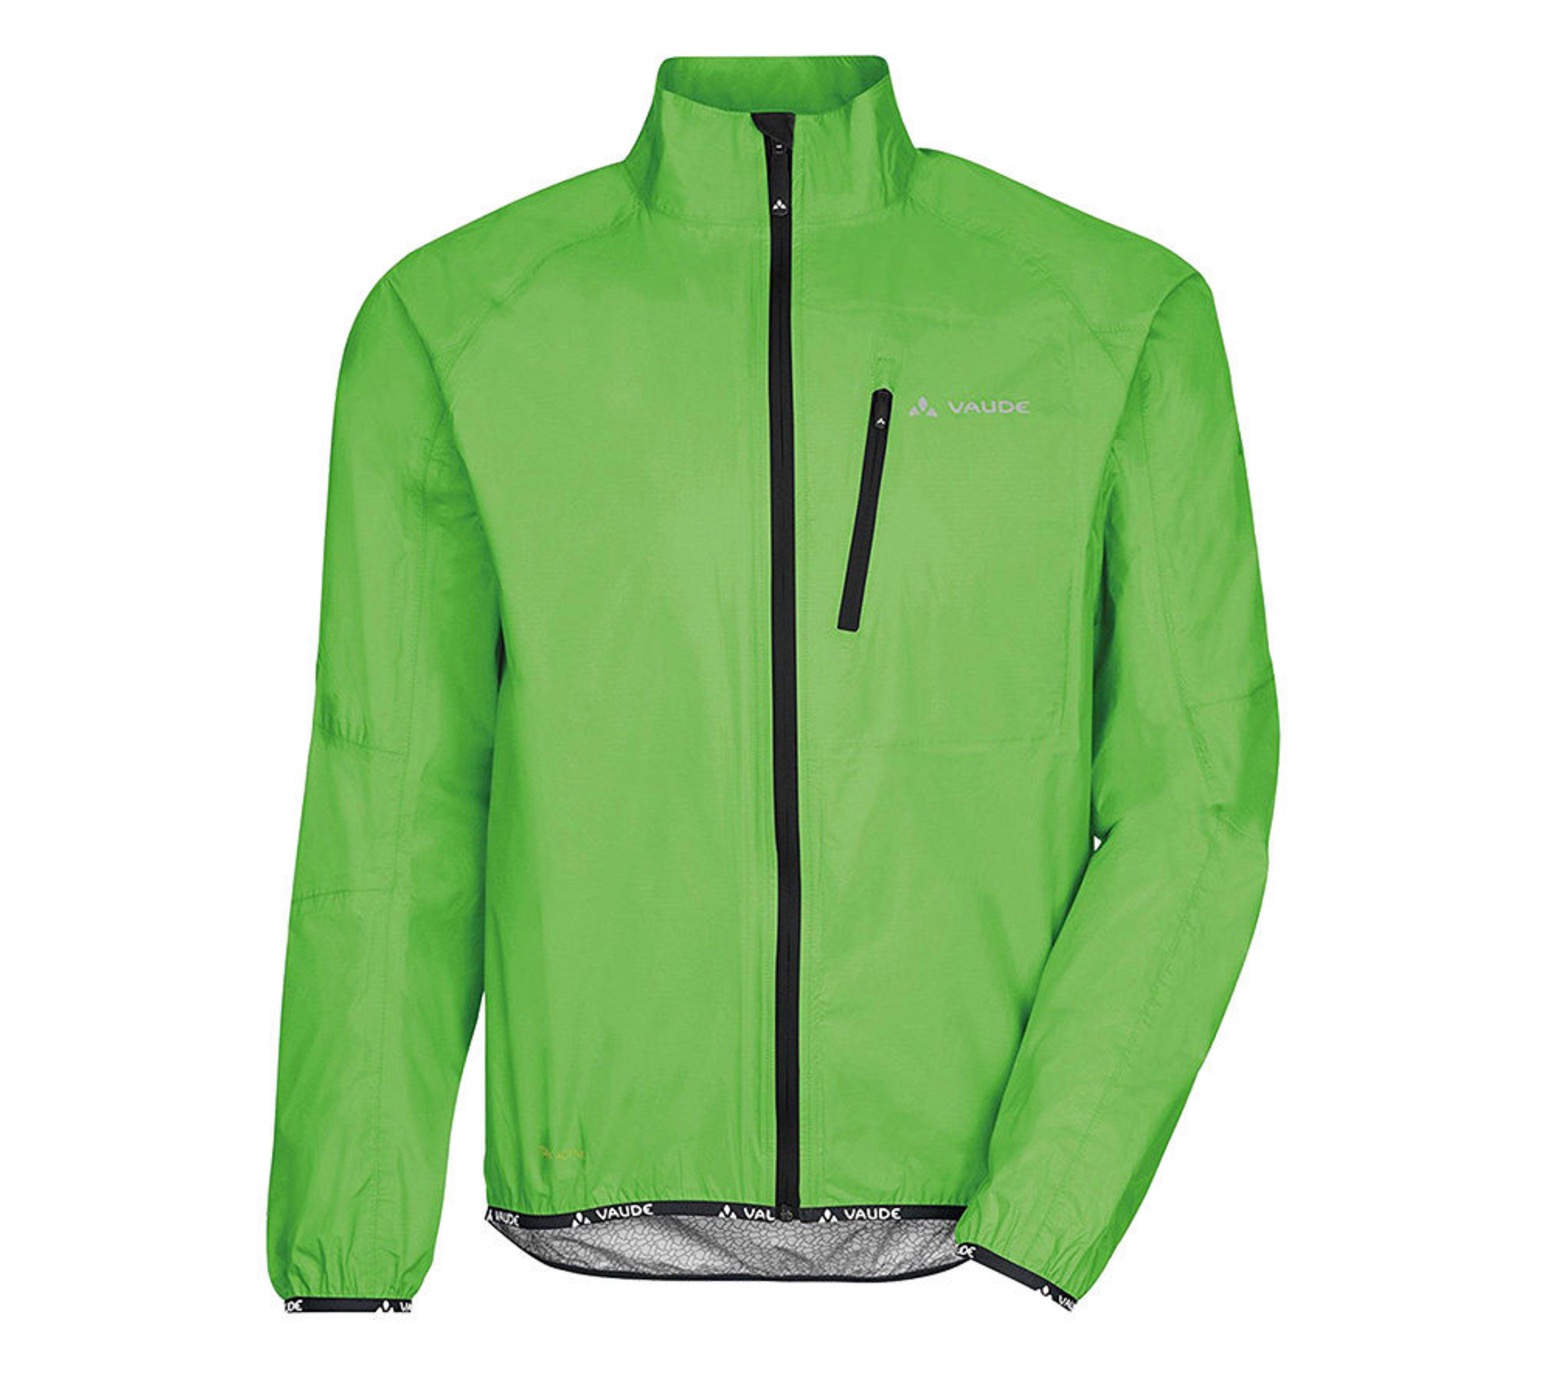 Vaude Herren Regenjacke Drop Jacket III in Grün für nur 49,90 Euro